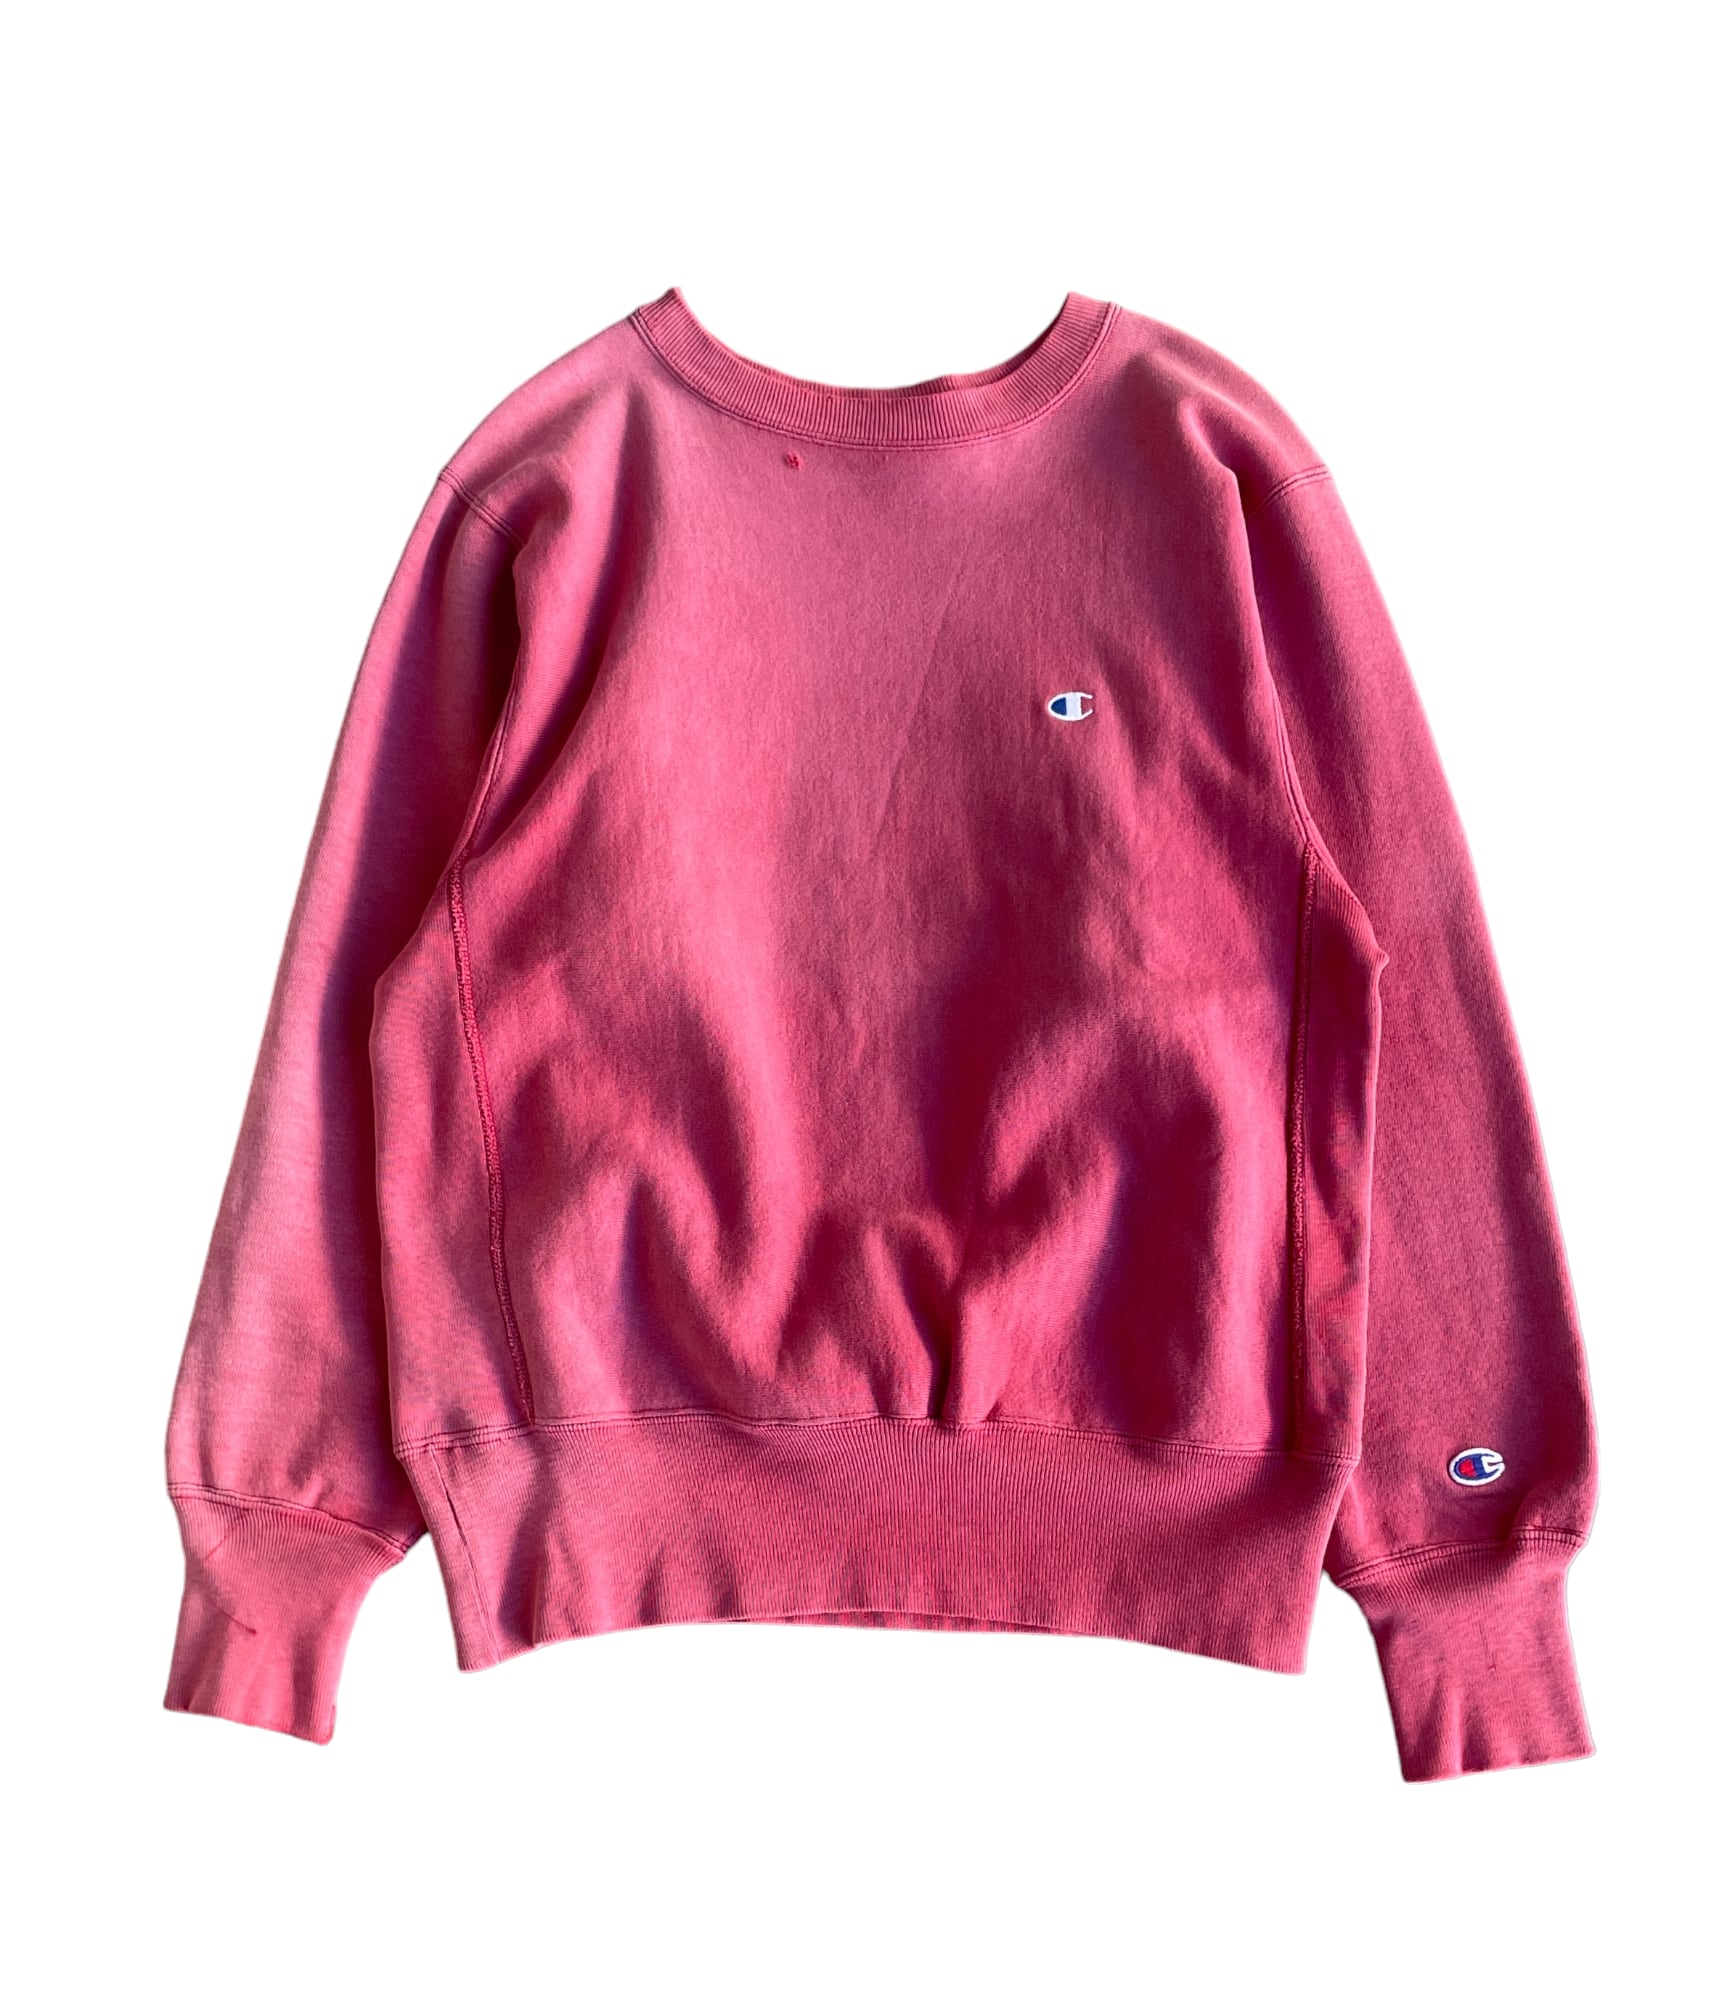 Vintage 90s M Champion reverse weave sweatshirt -fade pink